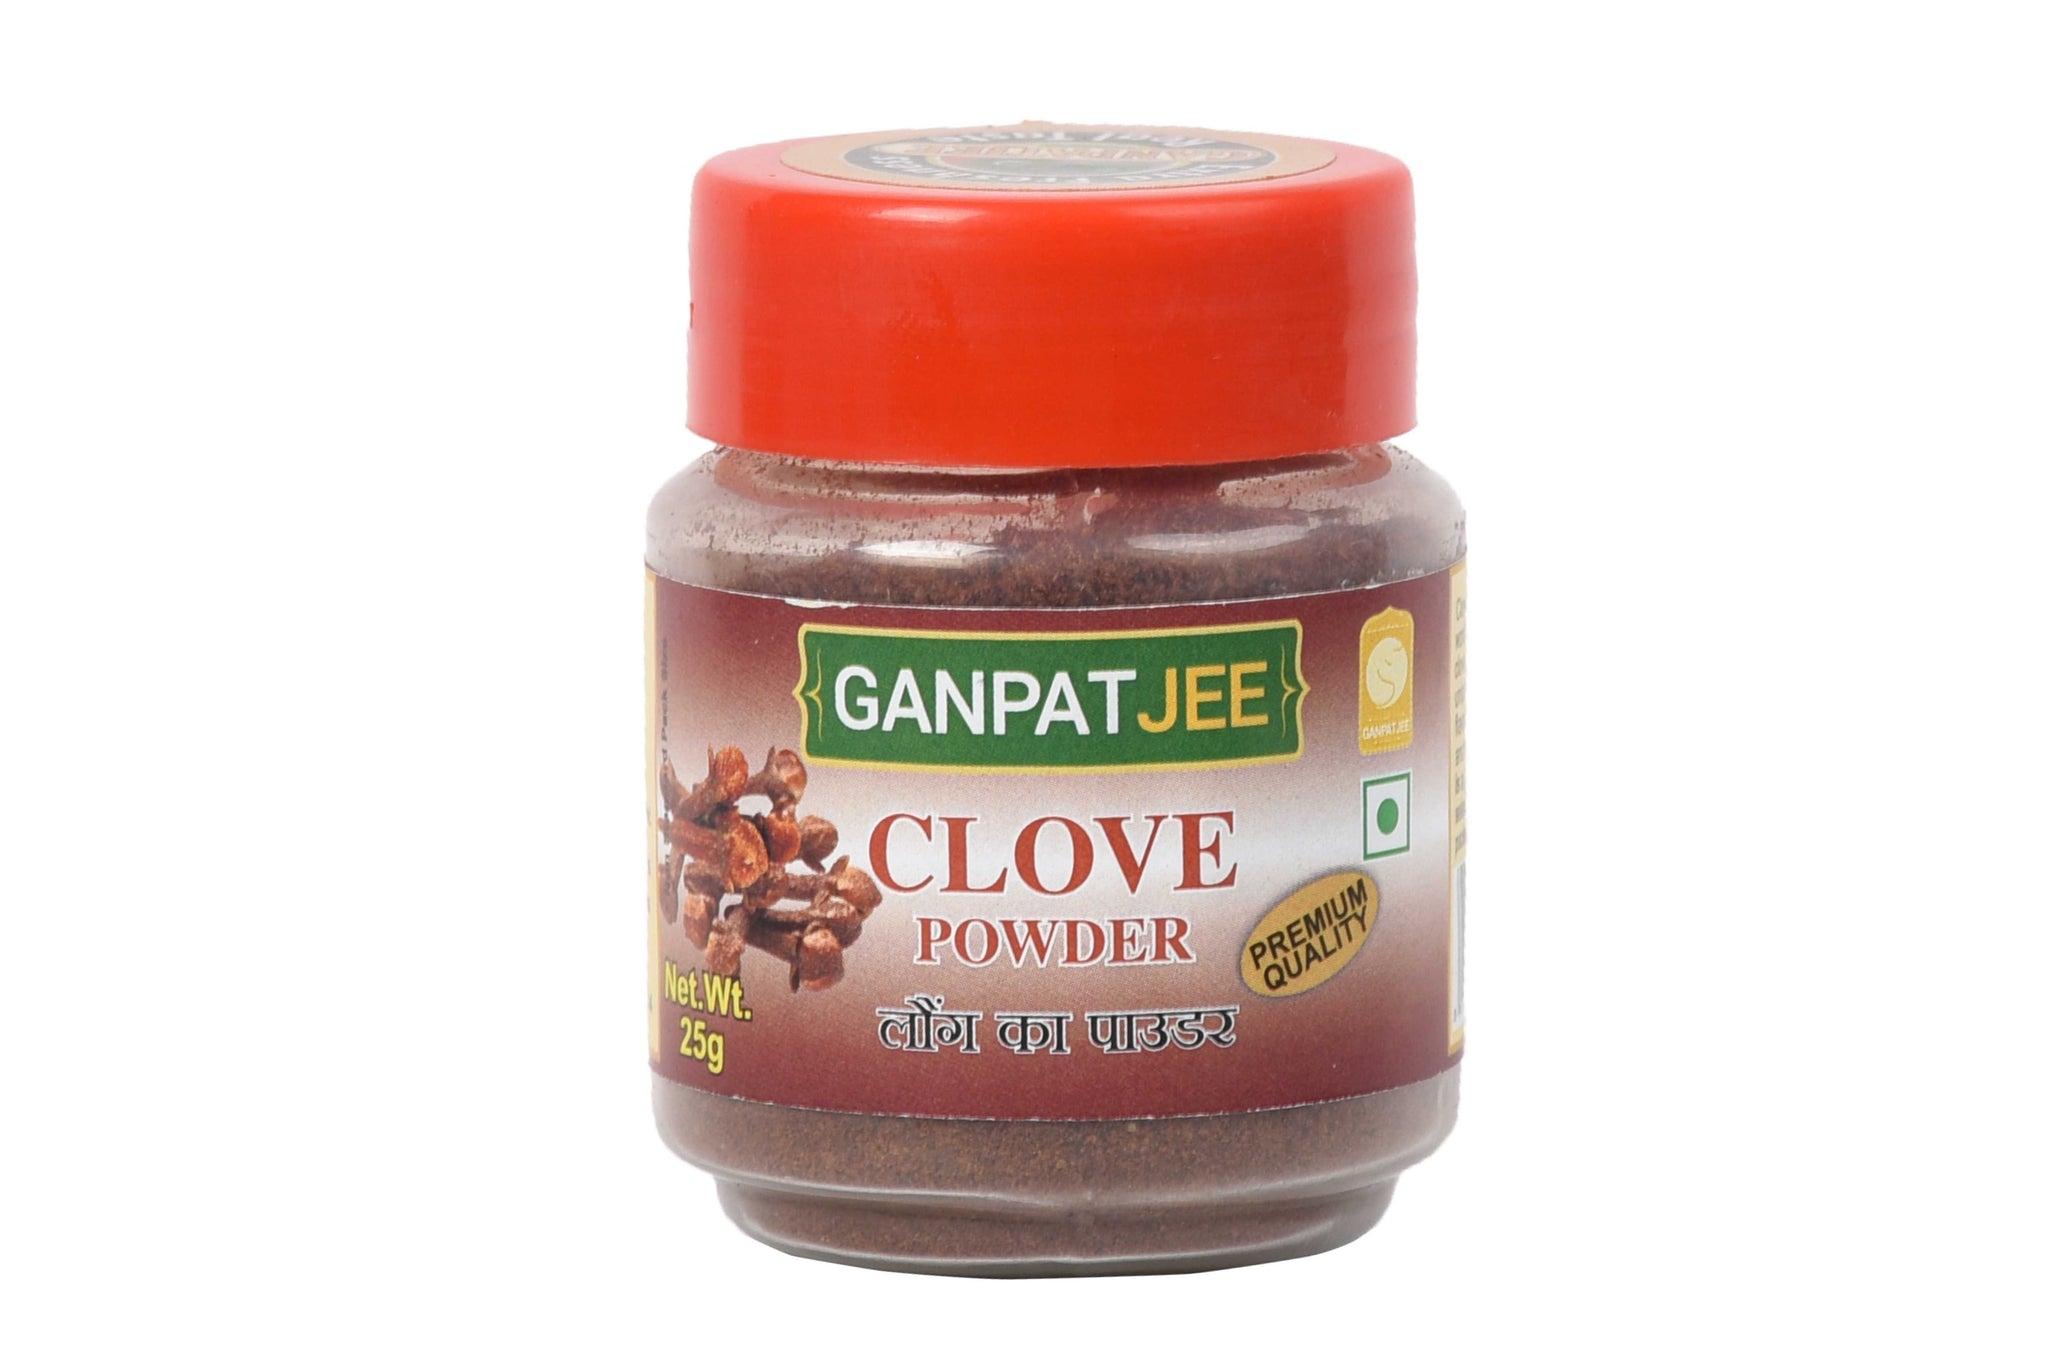 Ganpatjee Clove Powder 25g